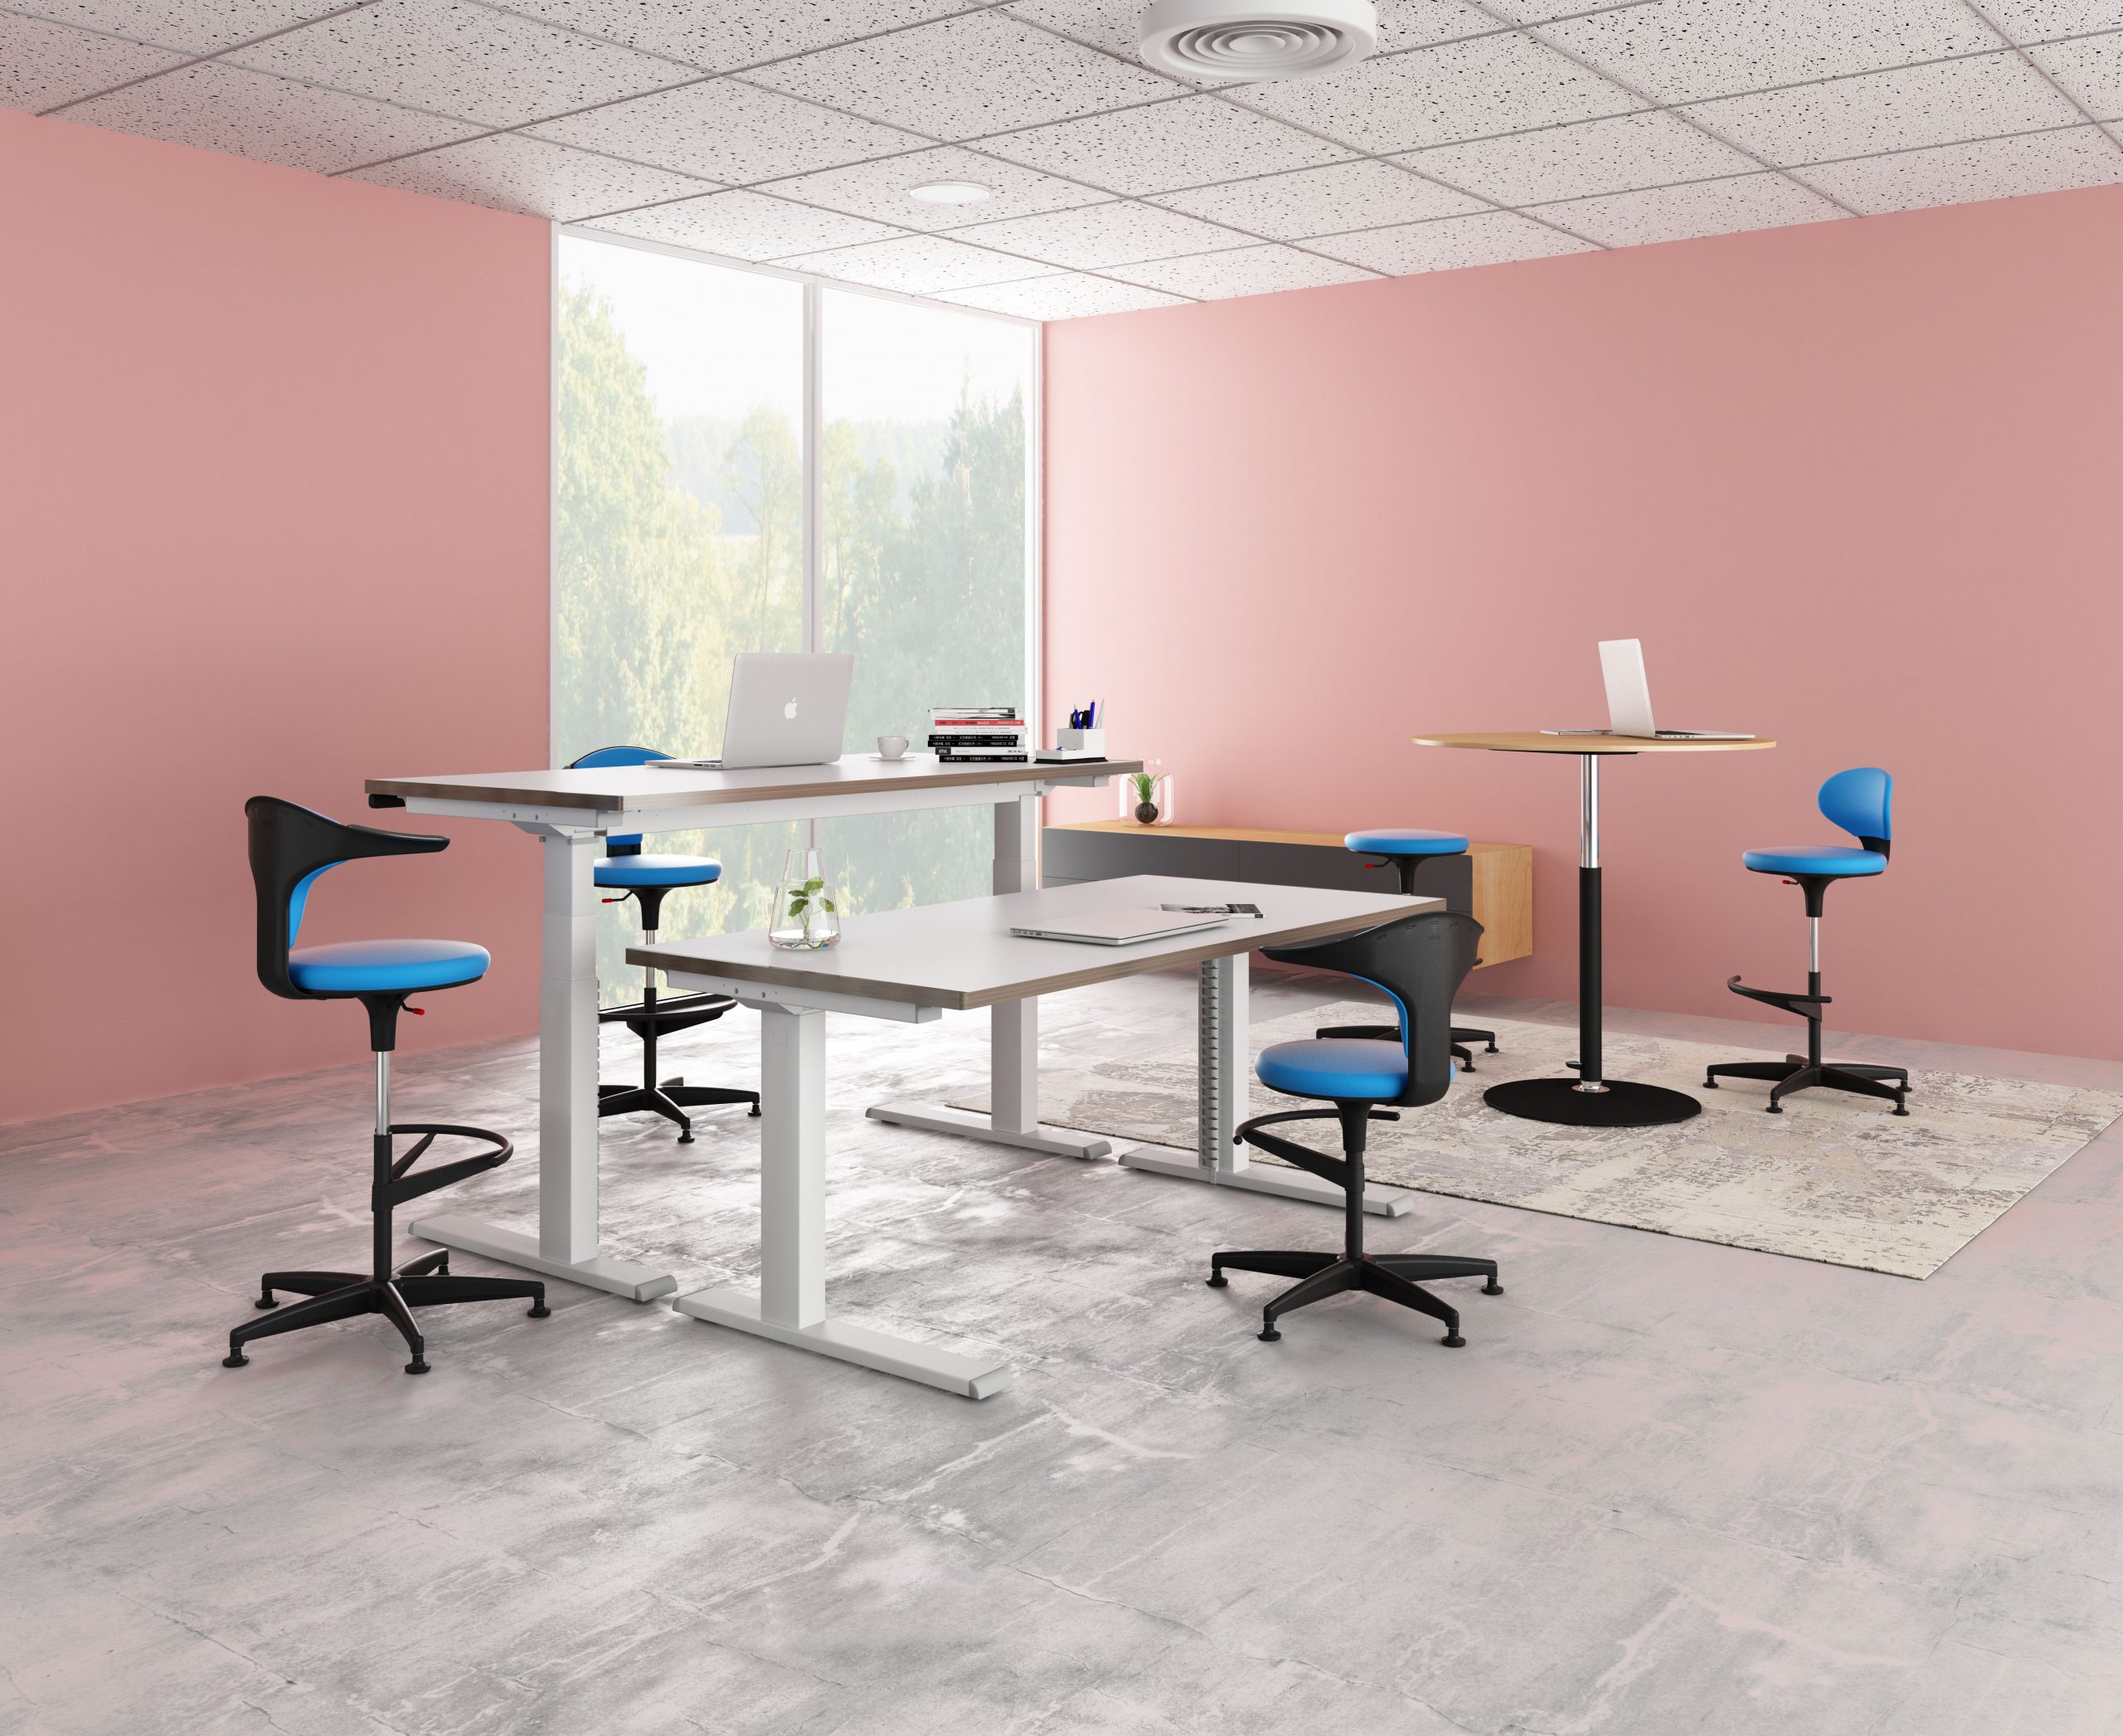 Ginko range of stools with Vertigo 2.0 height adjustable table in a pink wall room